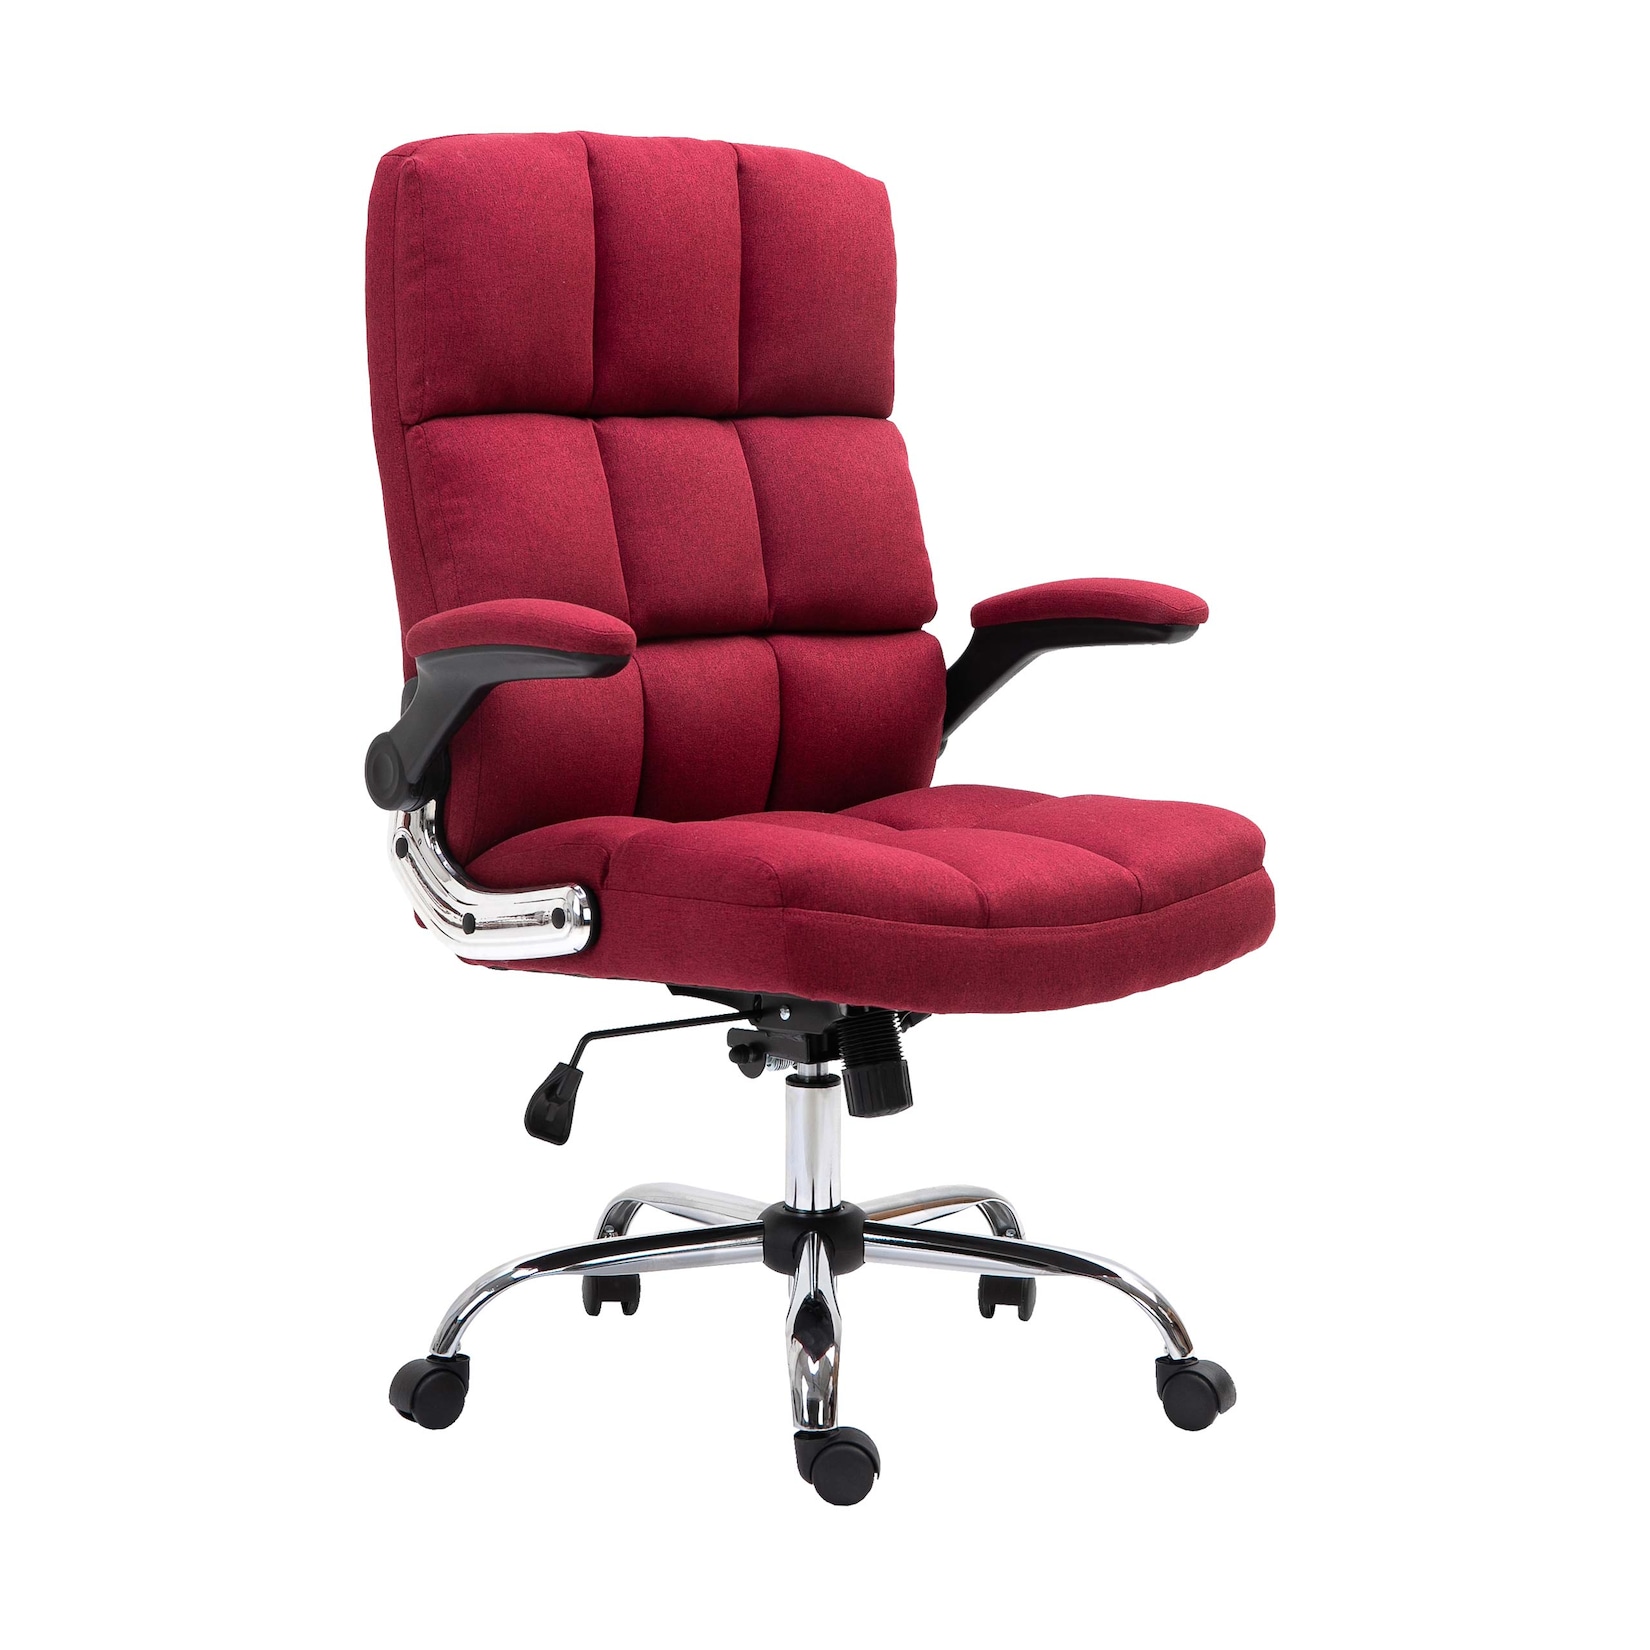 MCW Bürostuhl -J21, Chefsessel Drehstuhl Schreibtischstuhl, höhenverstellbar ~ Stoff/Textil weinrot